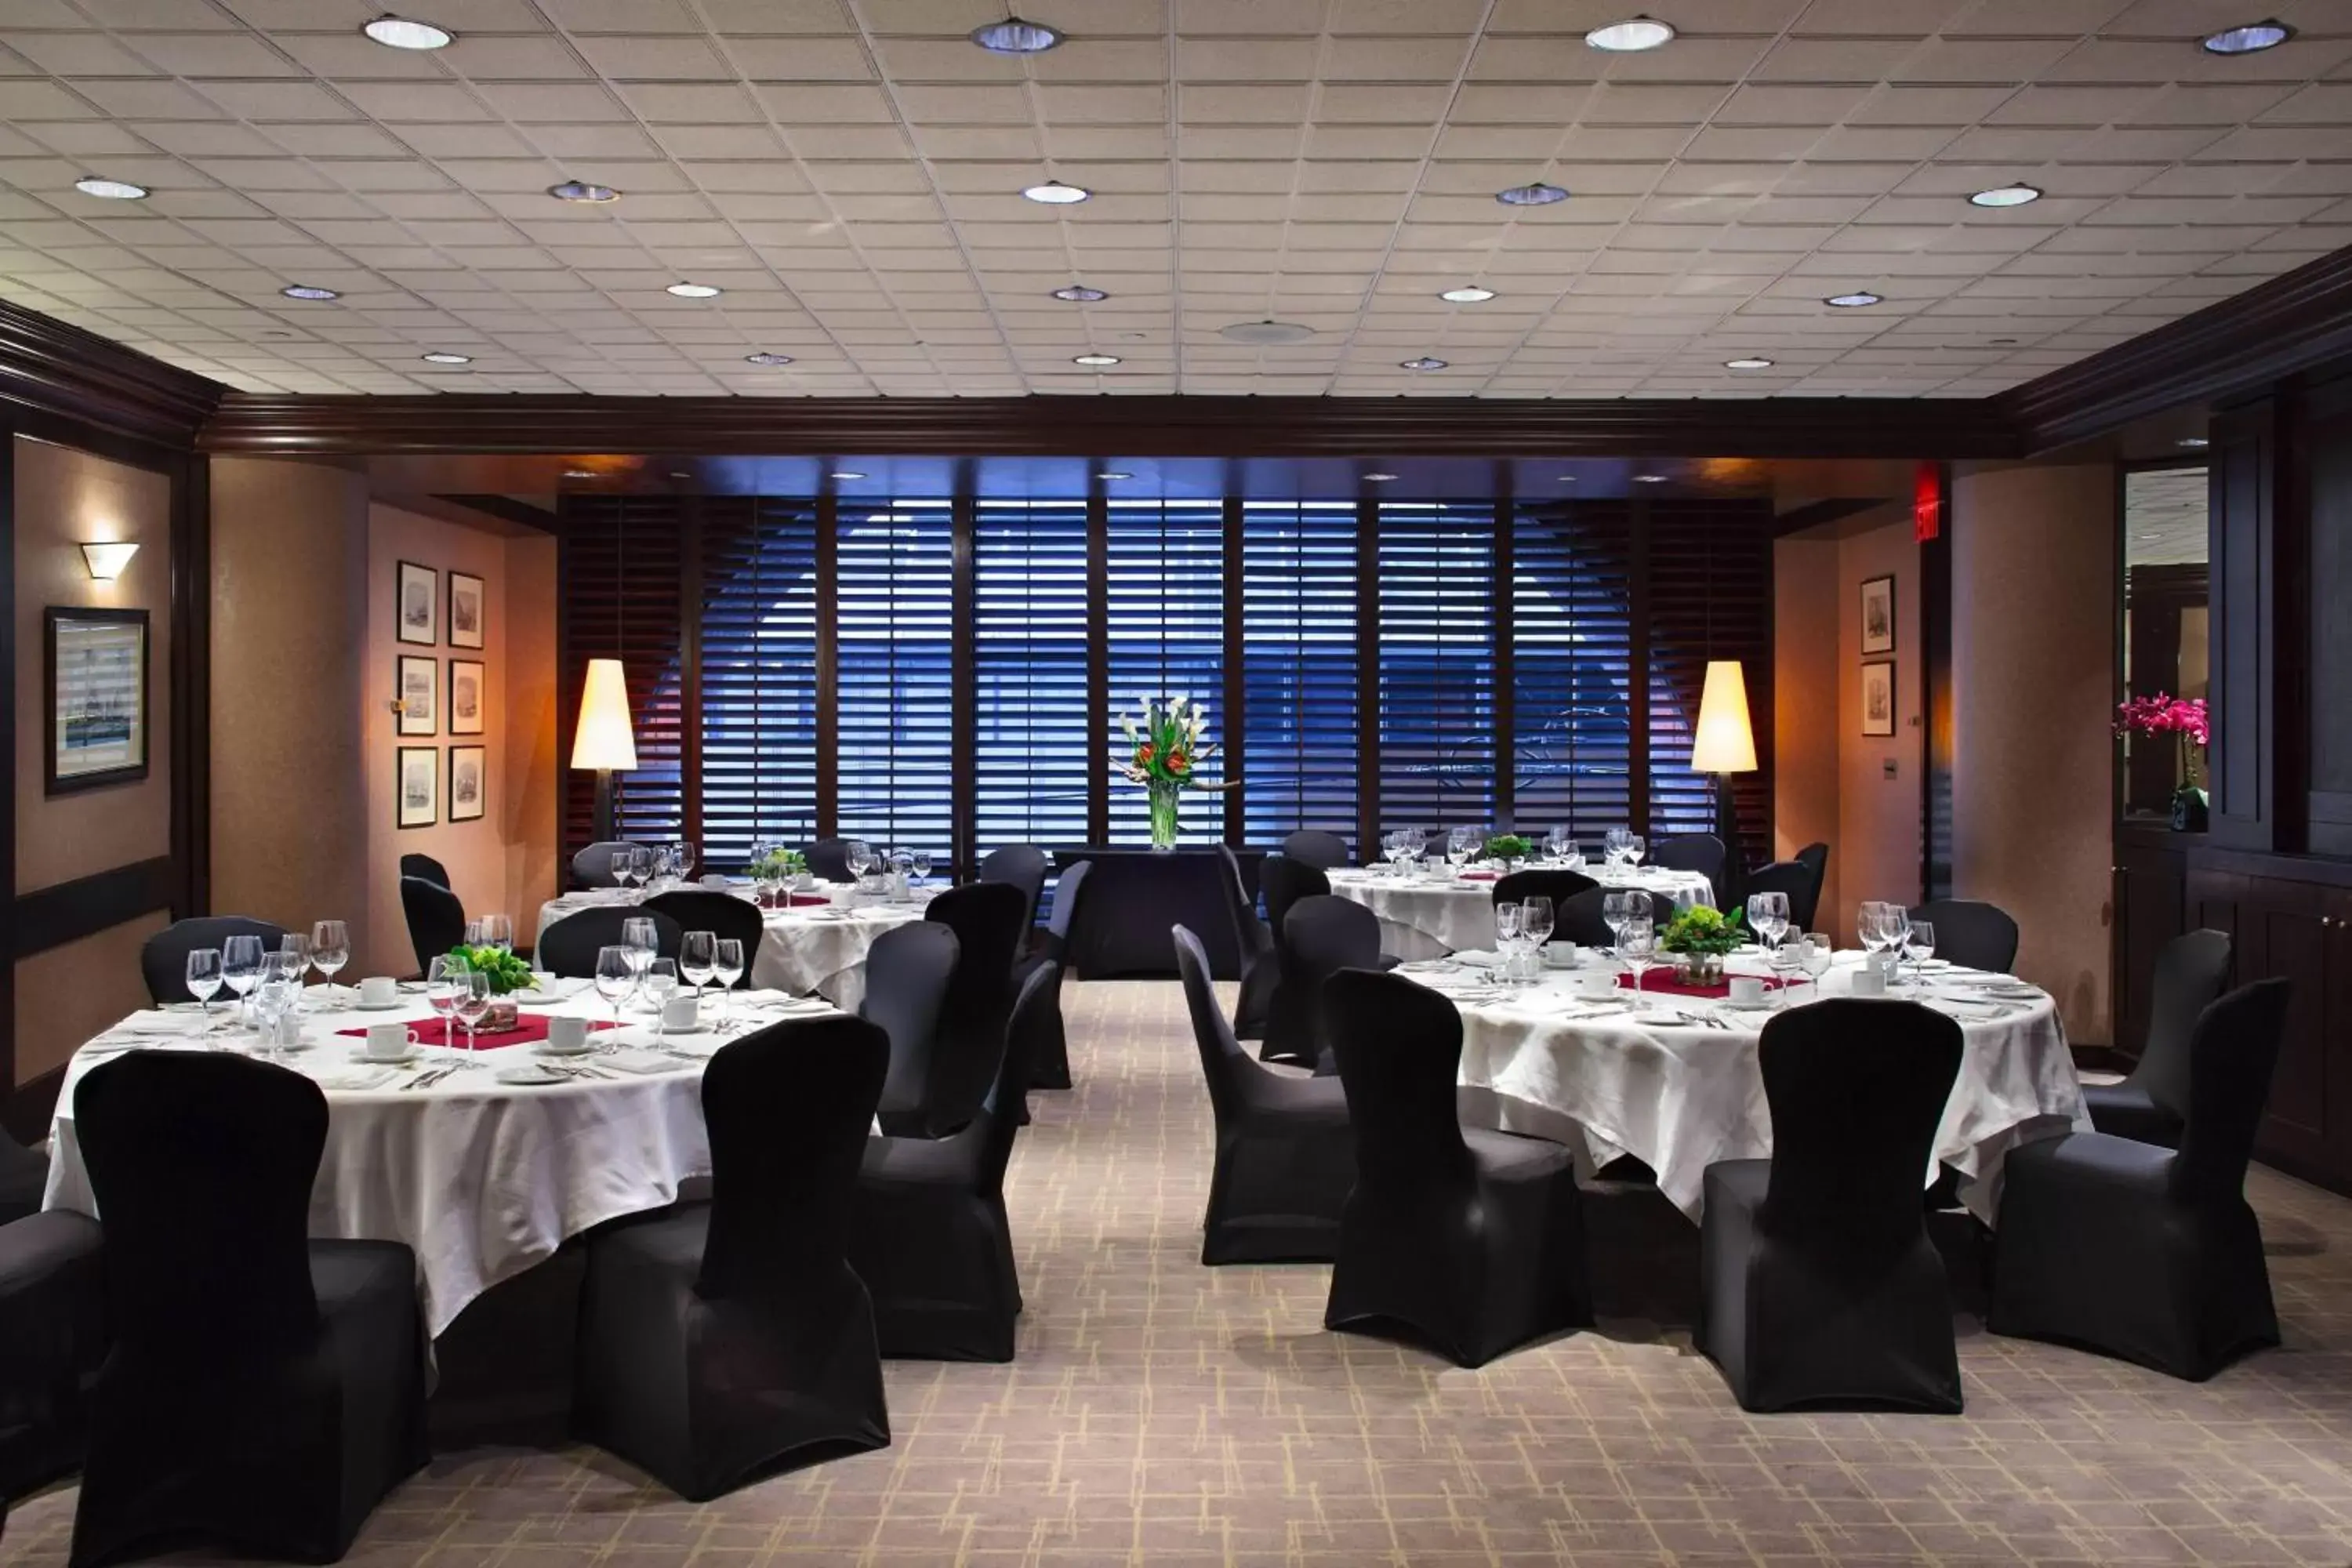 Meeting/conference room, Banquet Facilities in Metropolitan Hotel Vancouver